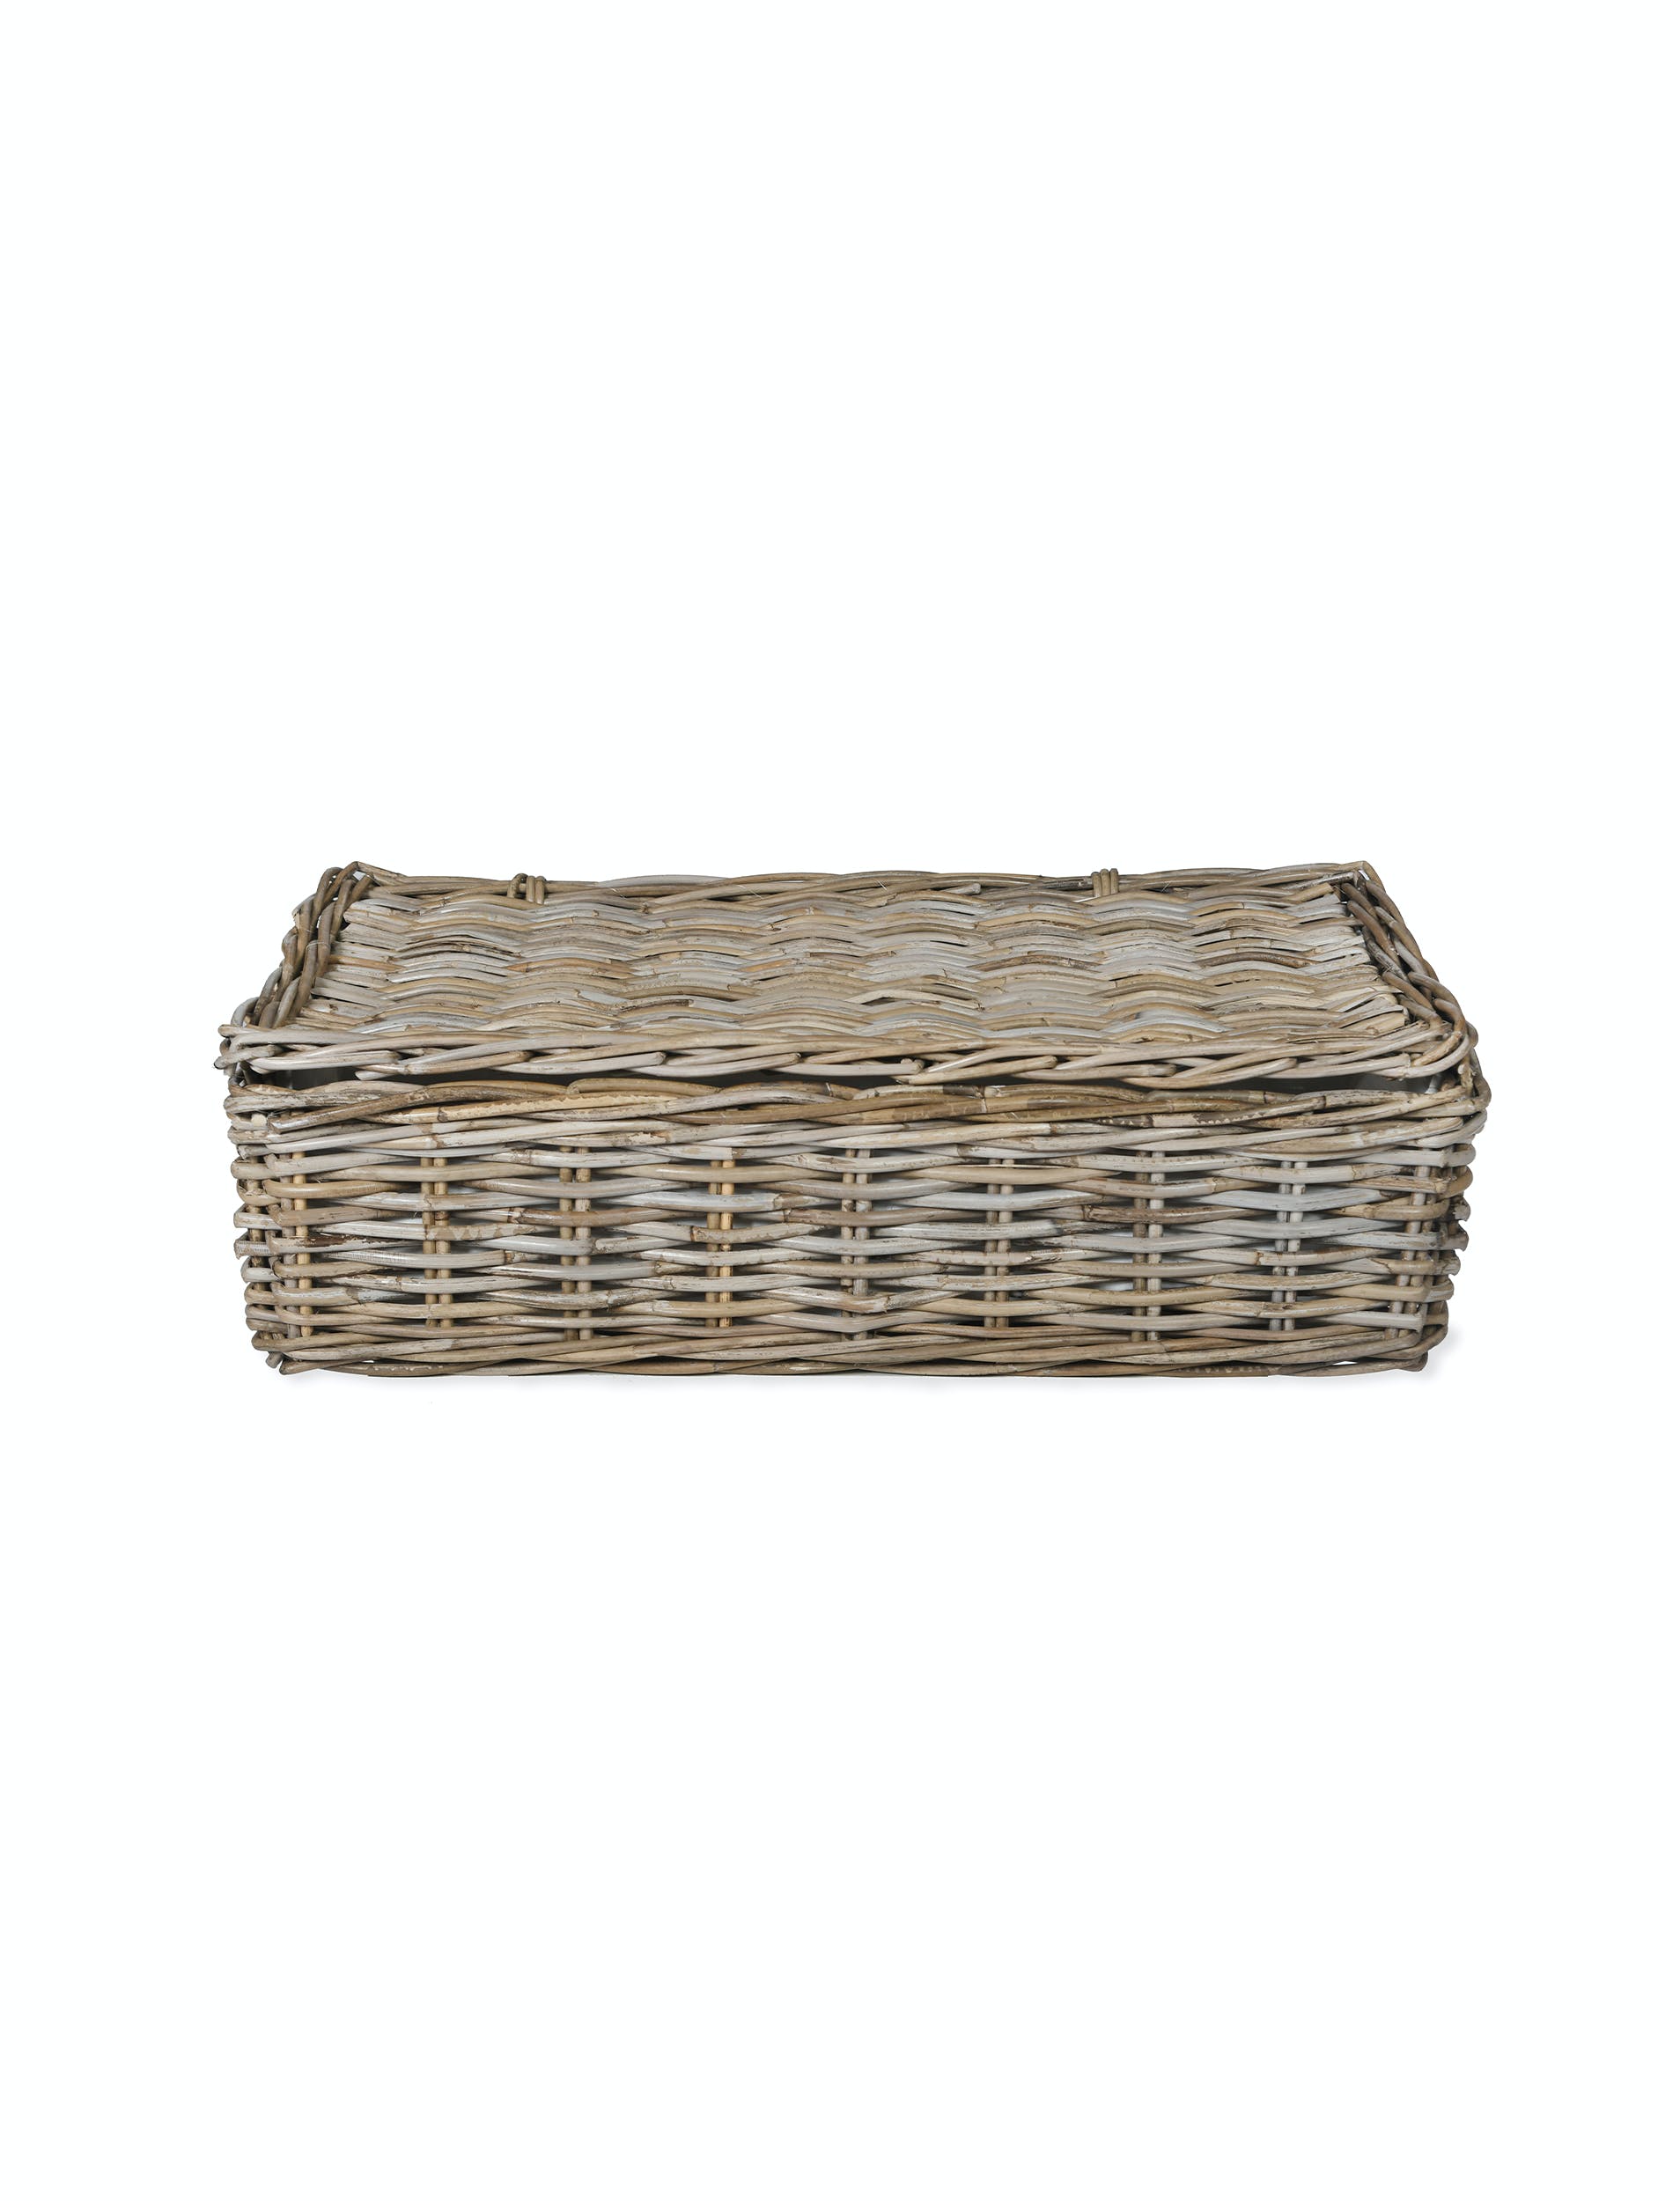 Garden Trading Bembridge Rattan Storage Basket with Lid  - Small